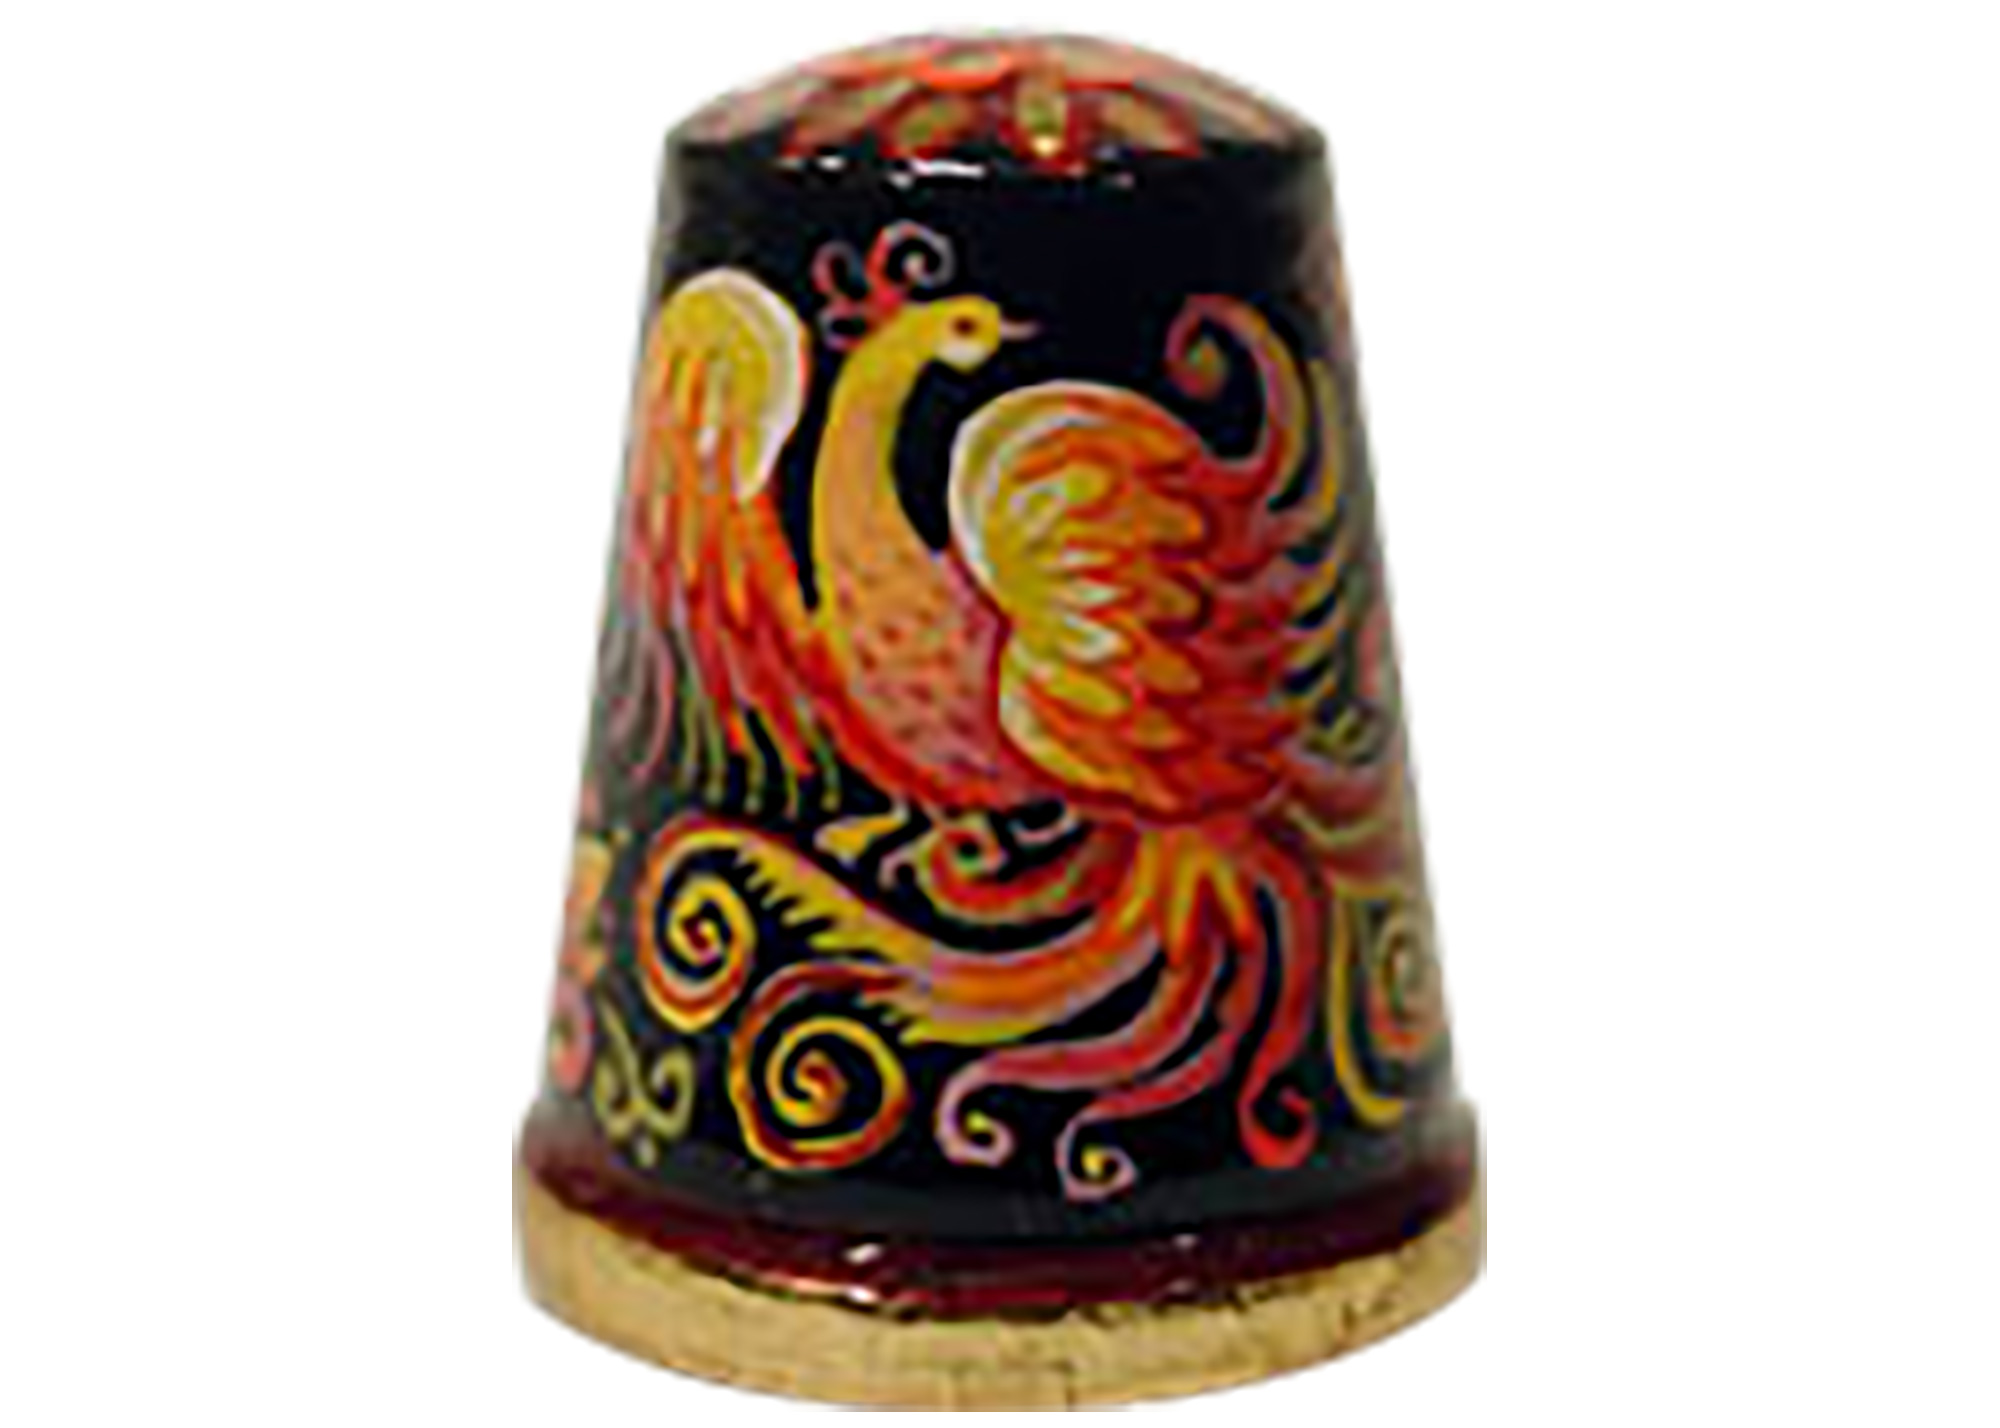 Buy The Fire Bird Fairy Tale Thimble, Wood 1" at GoldenCockerel.com